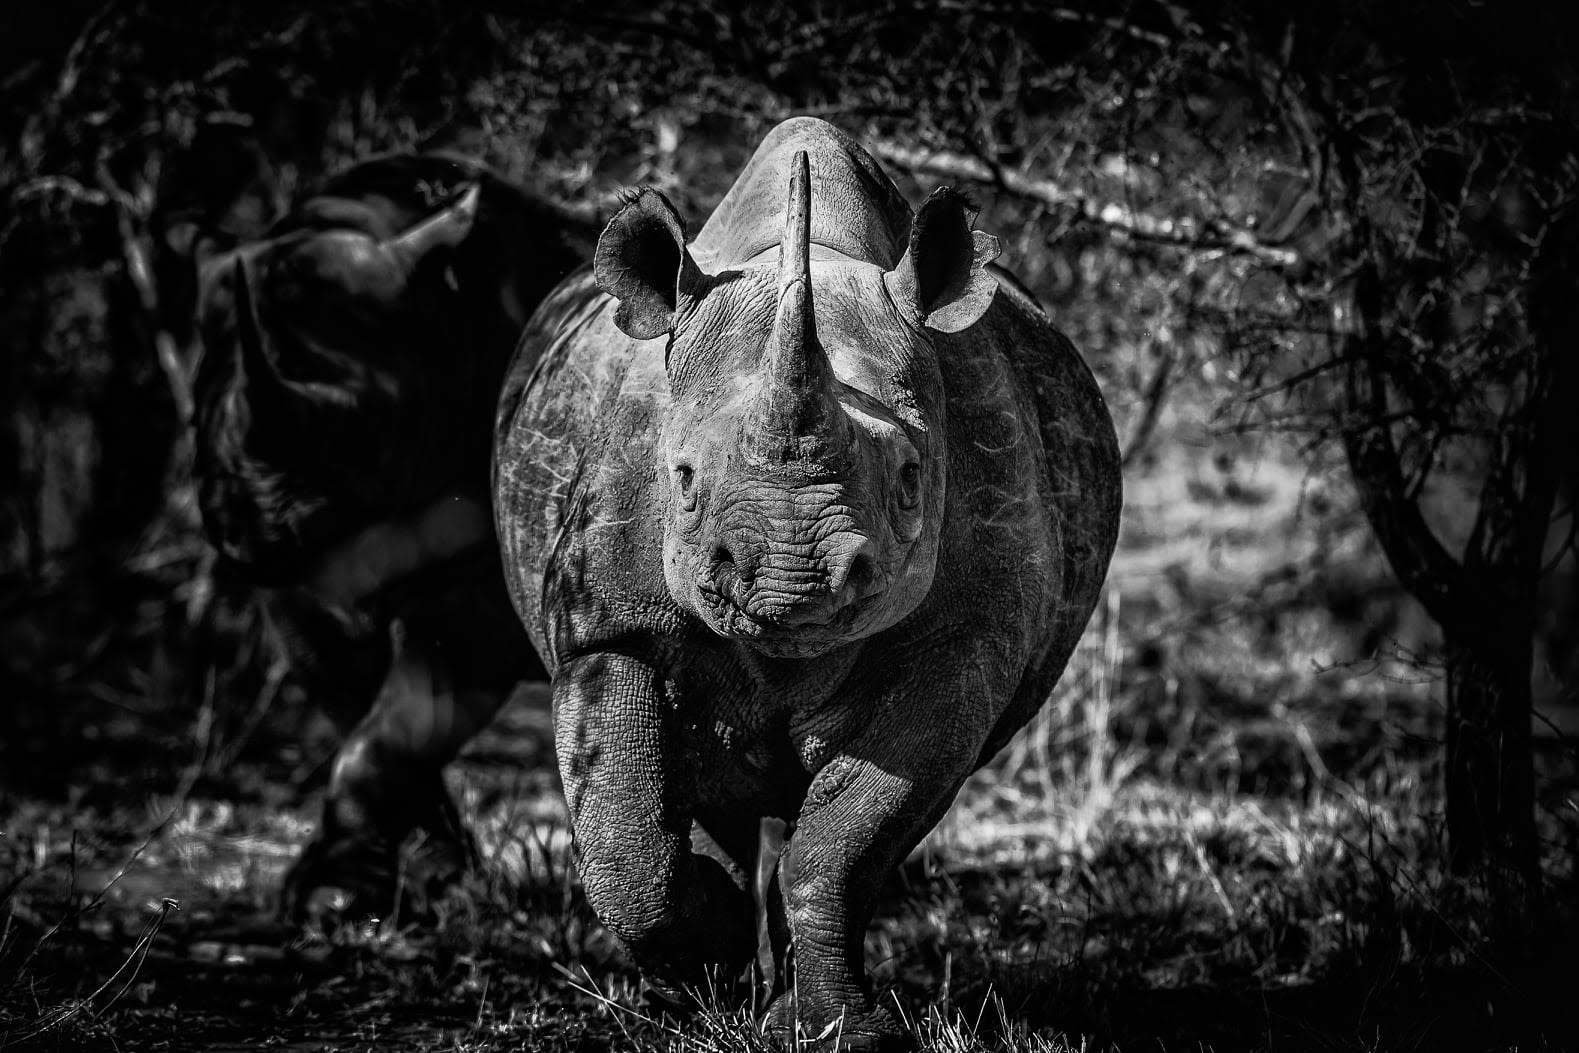 A rhino at Mahali Mzuri - Virgin Limited Edition and Richard Branson's game reserve in Kenya